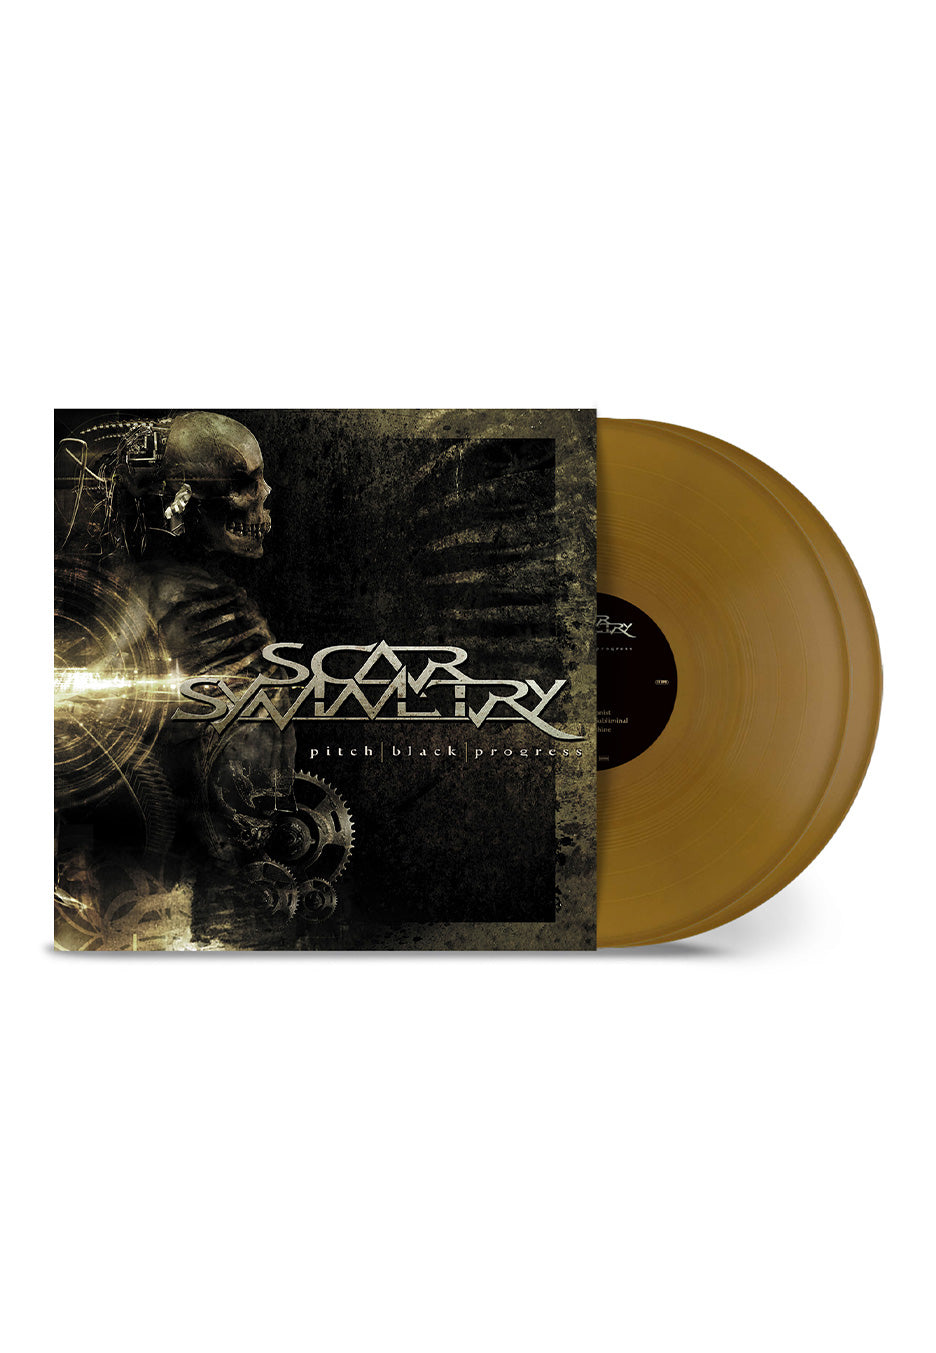 Scar Symmetry - Pitch Black Progress Ltd. Gold - Colored 2 Vinyl